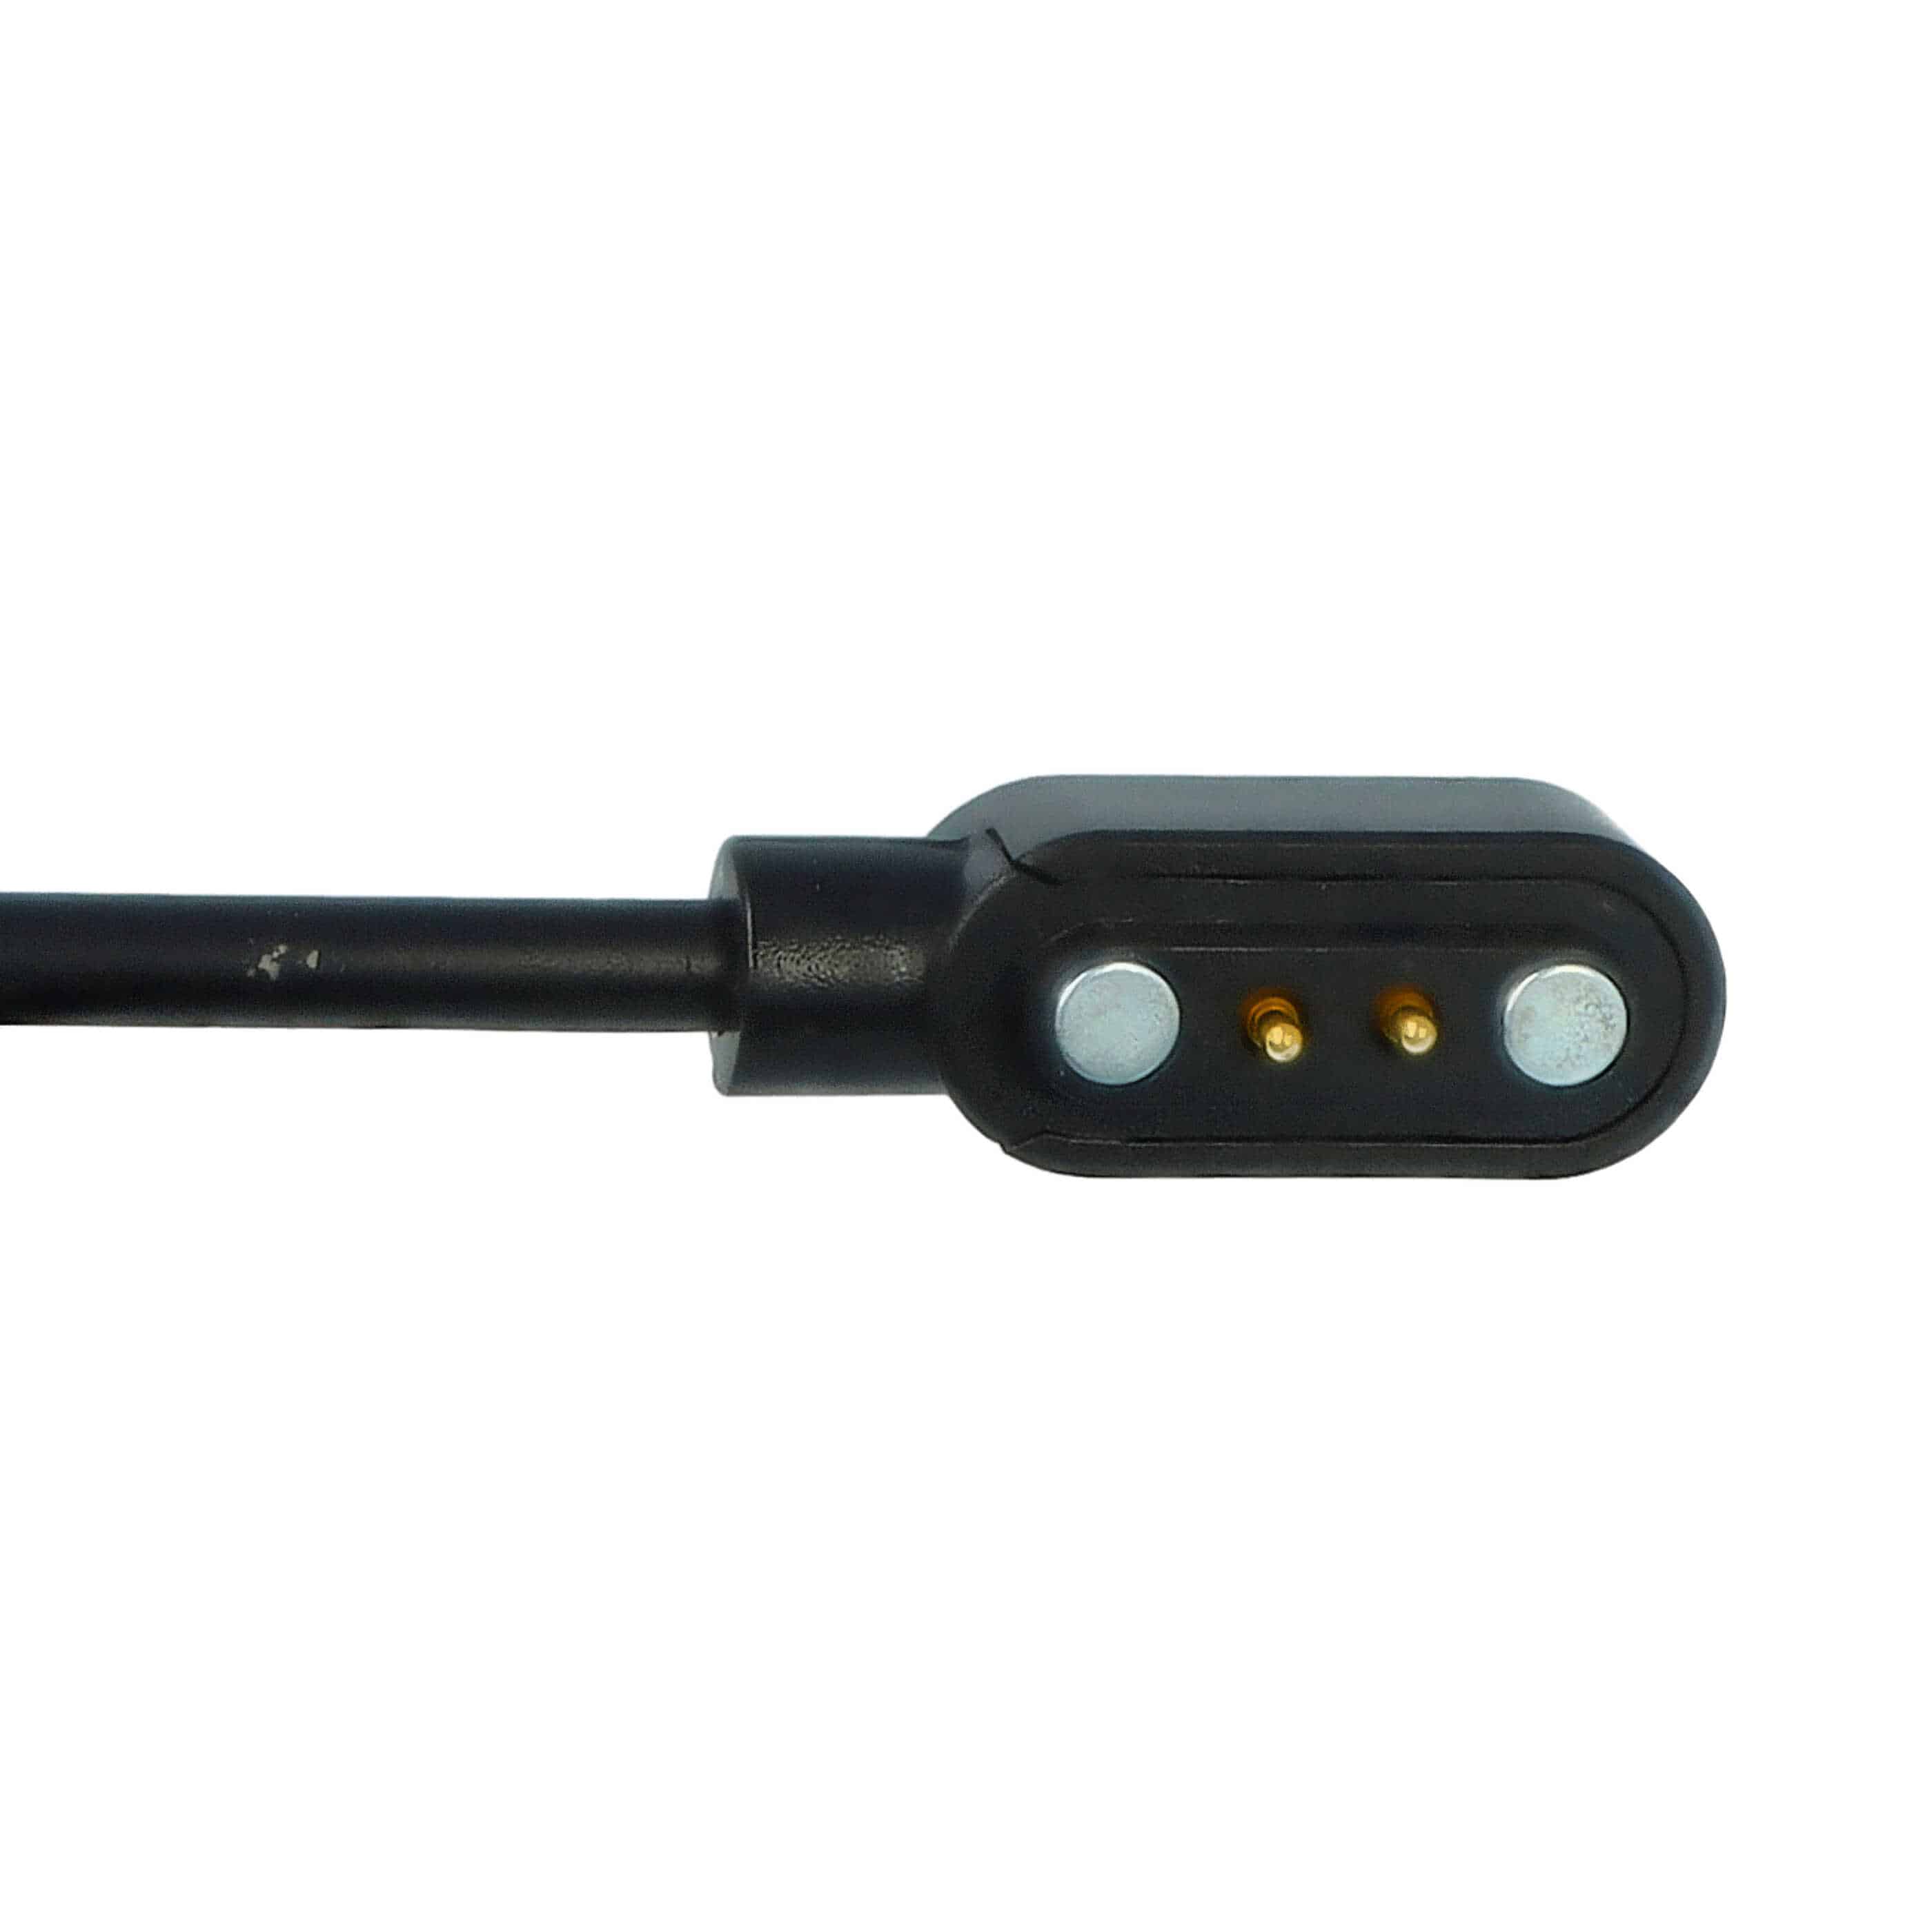 Cable de carga USB para smartwatch Umidigi, Willful 3 - negro 100 cm